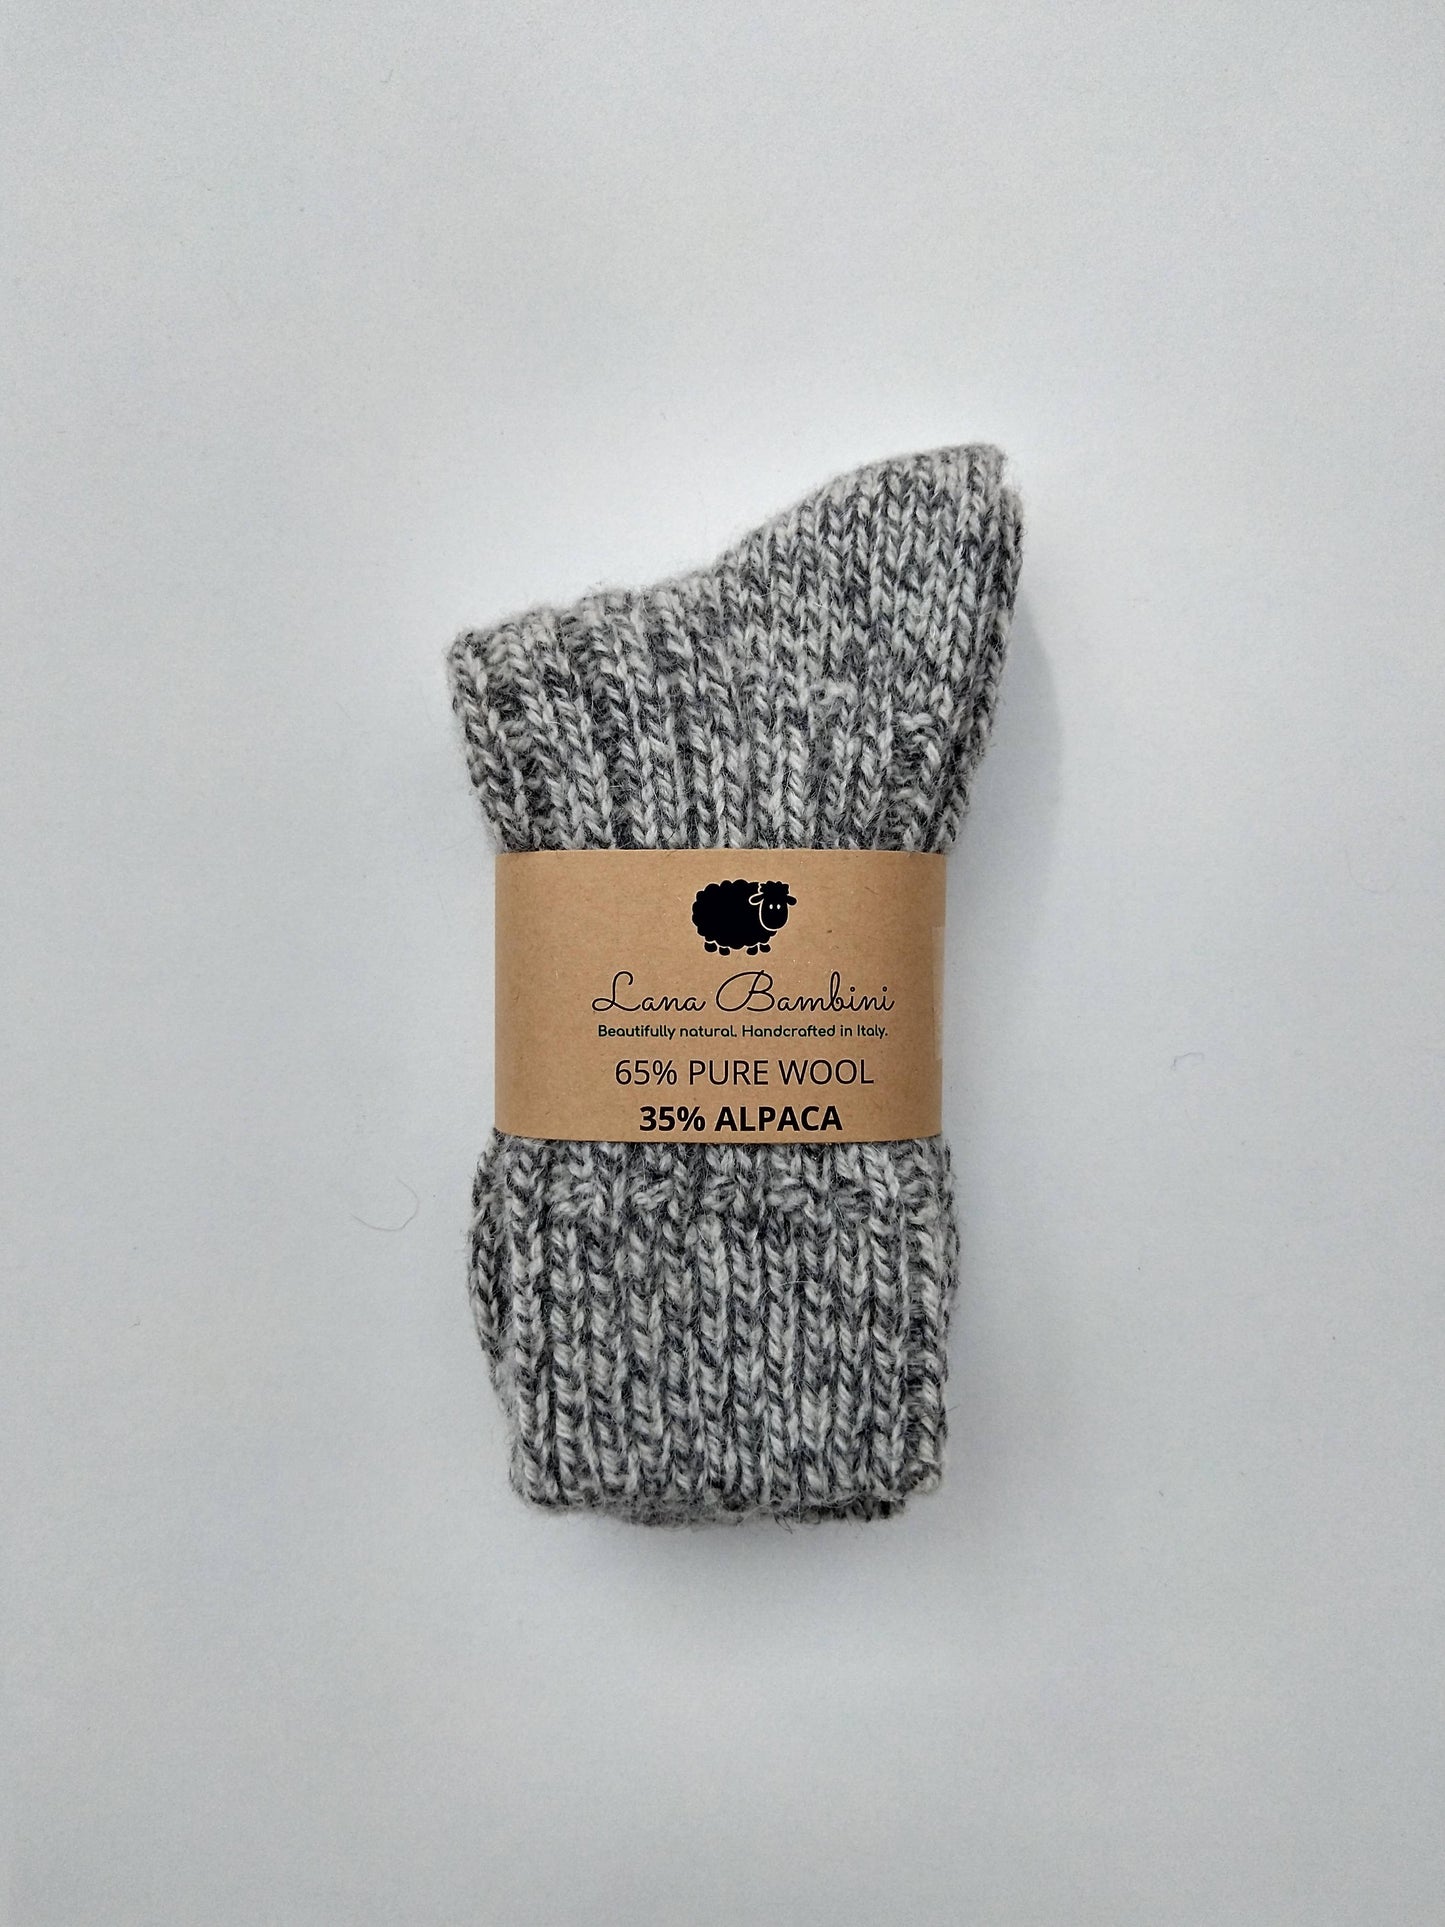 Rho Alpaca/Wool Socks